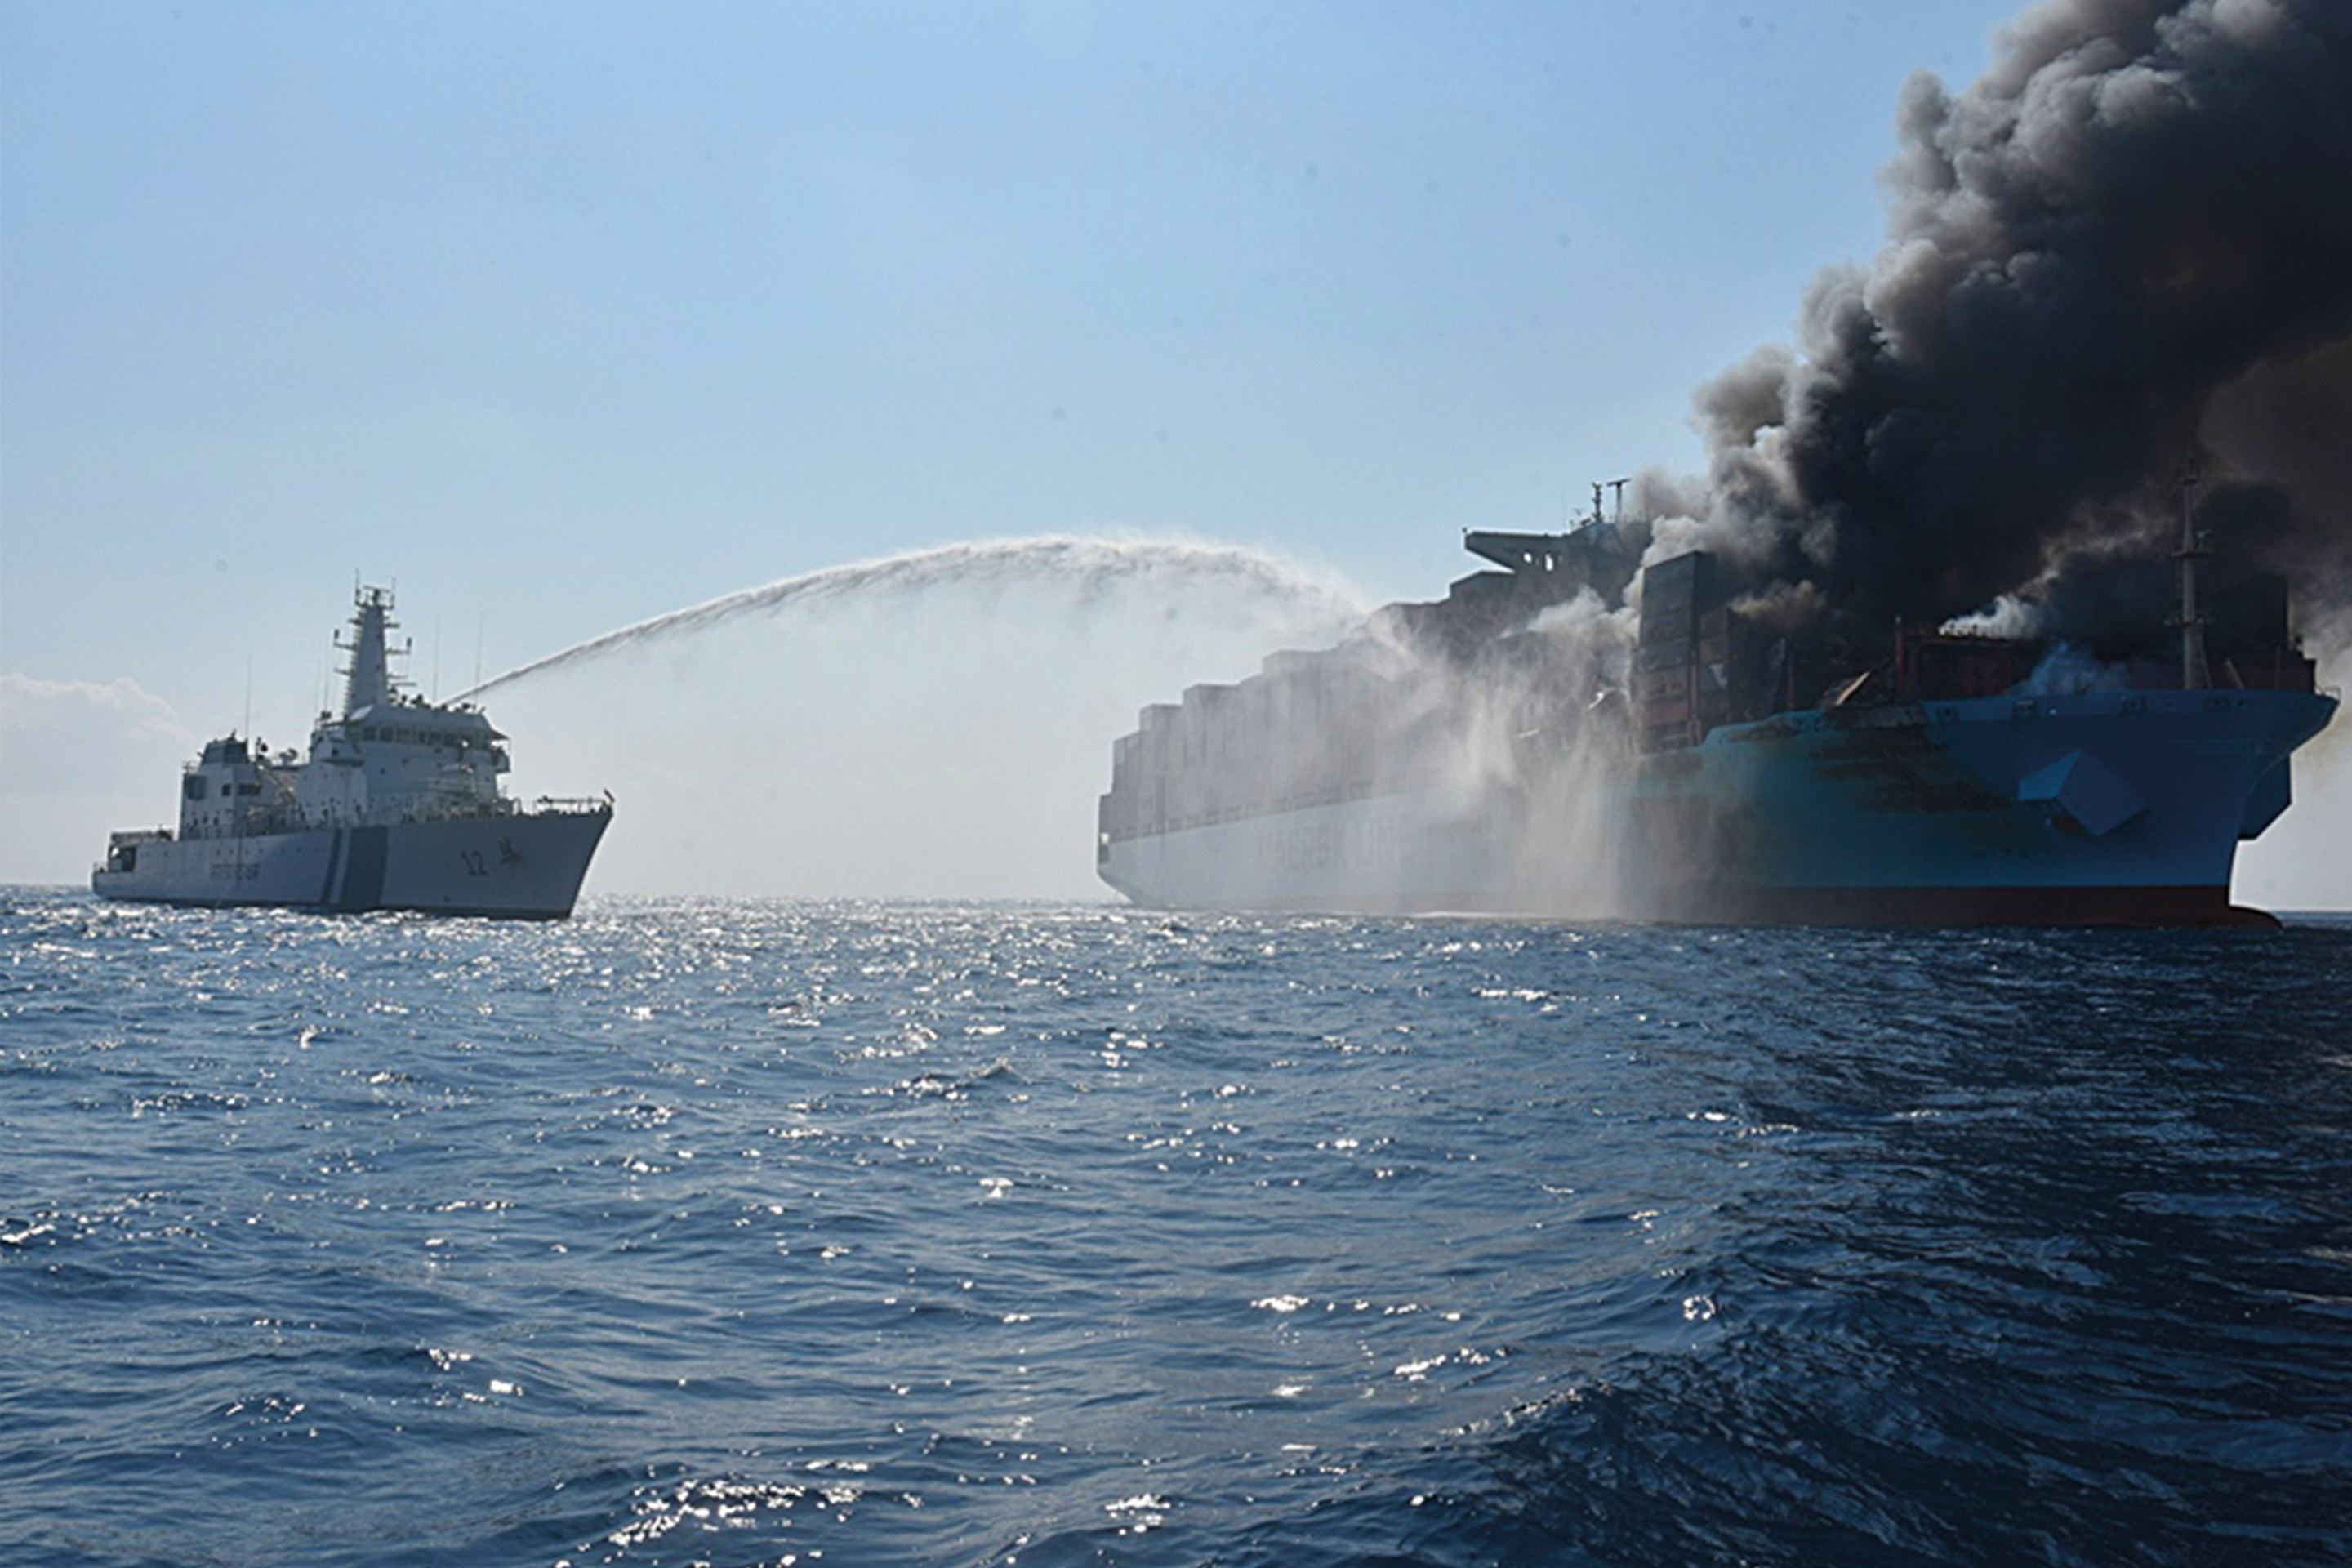 Salvage operation of the Maersk Honam